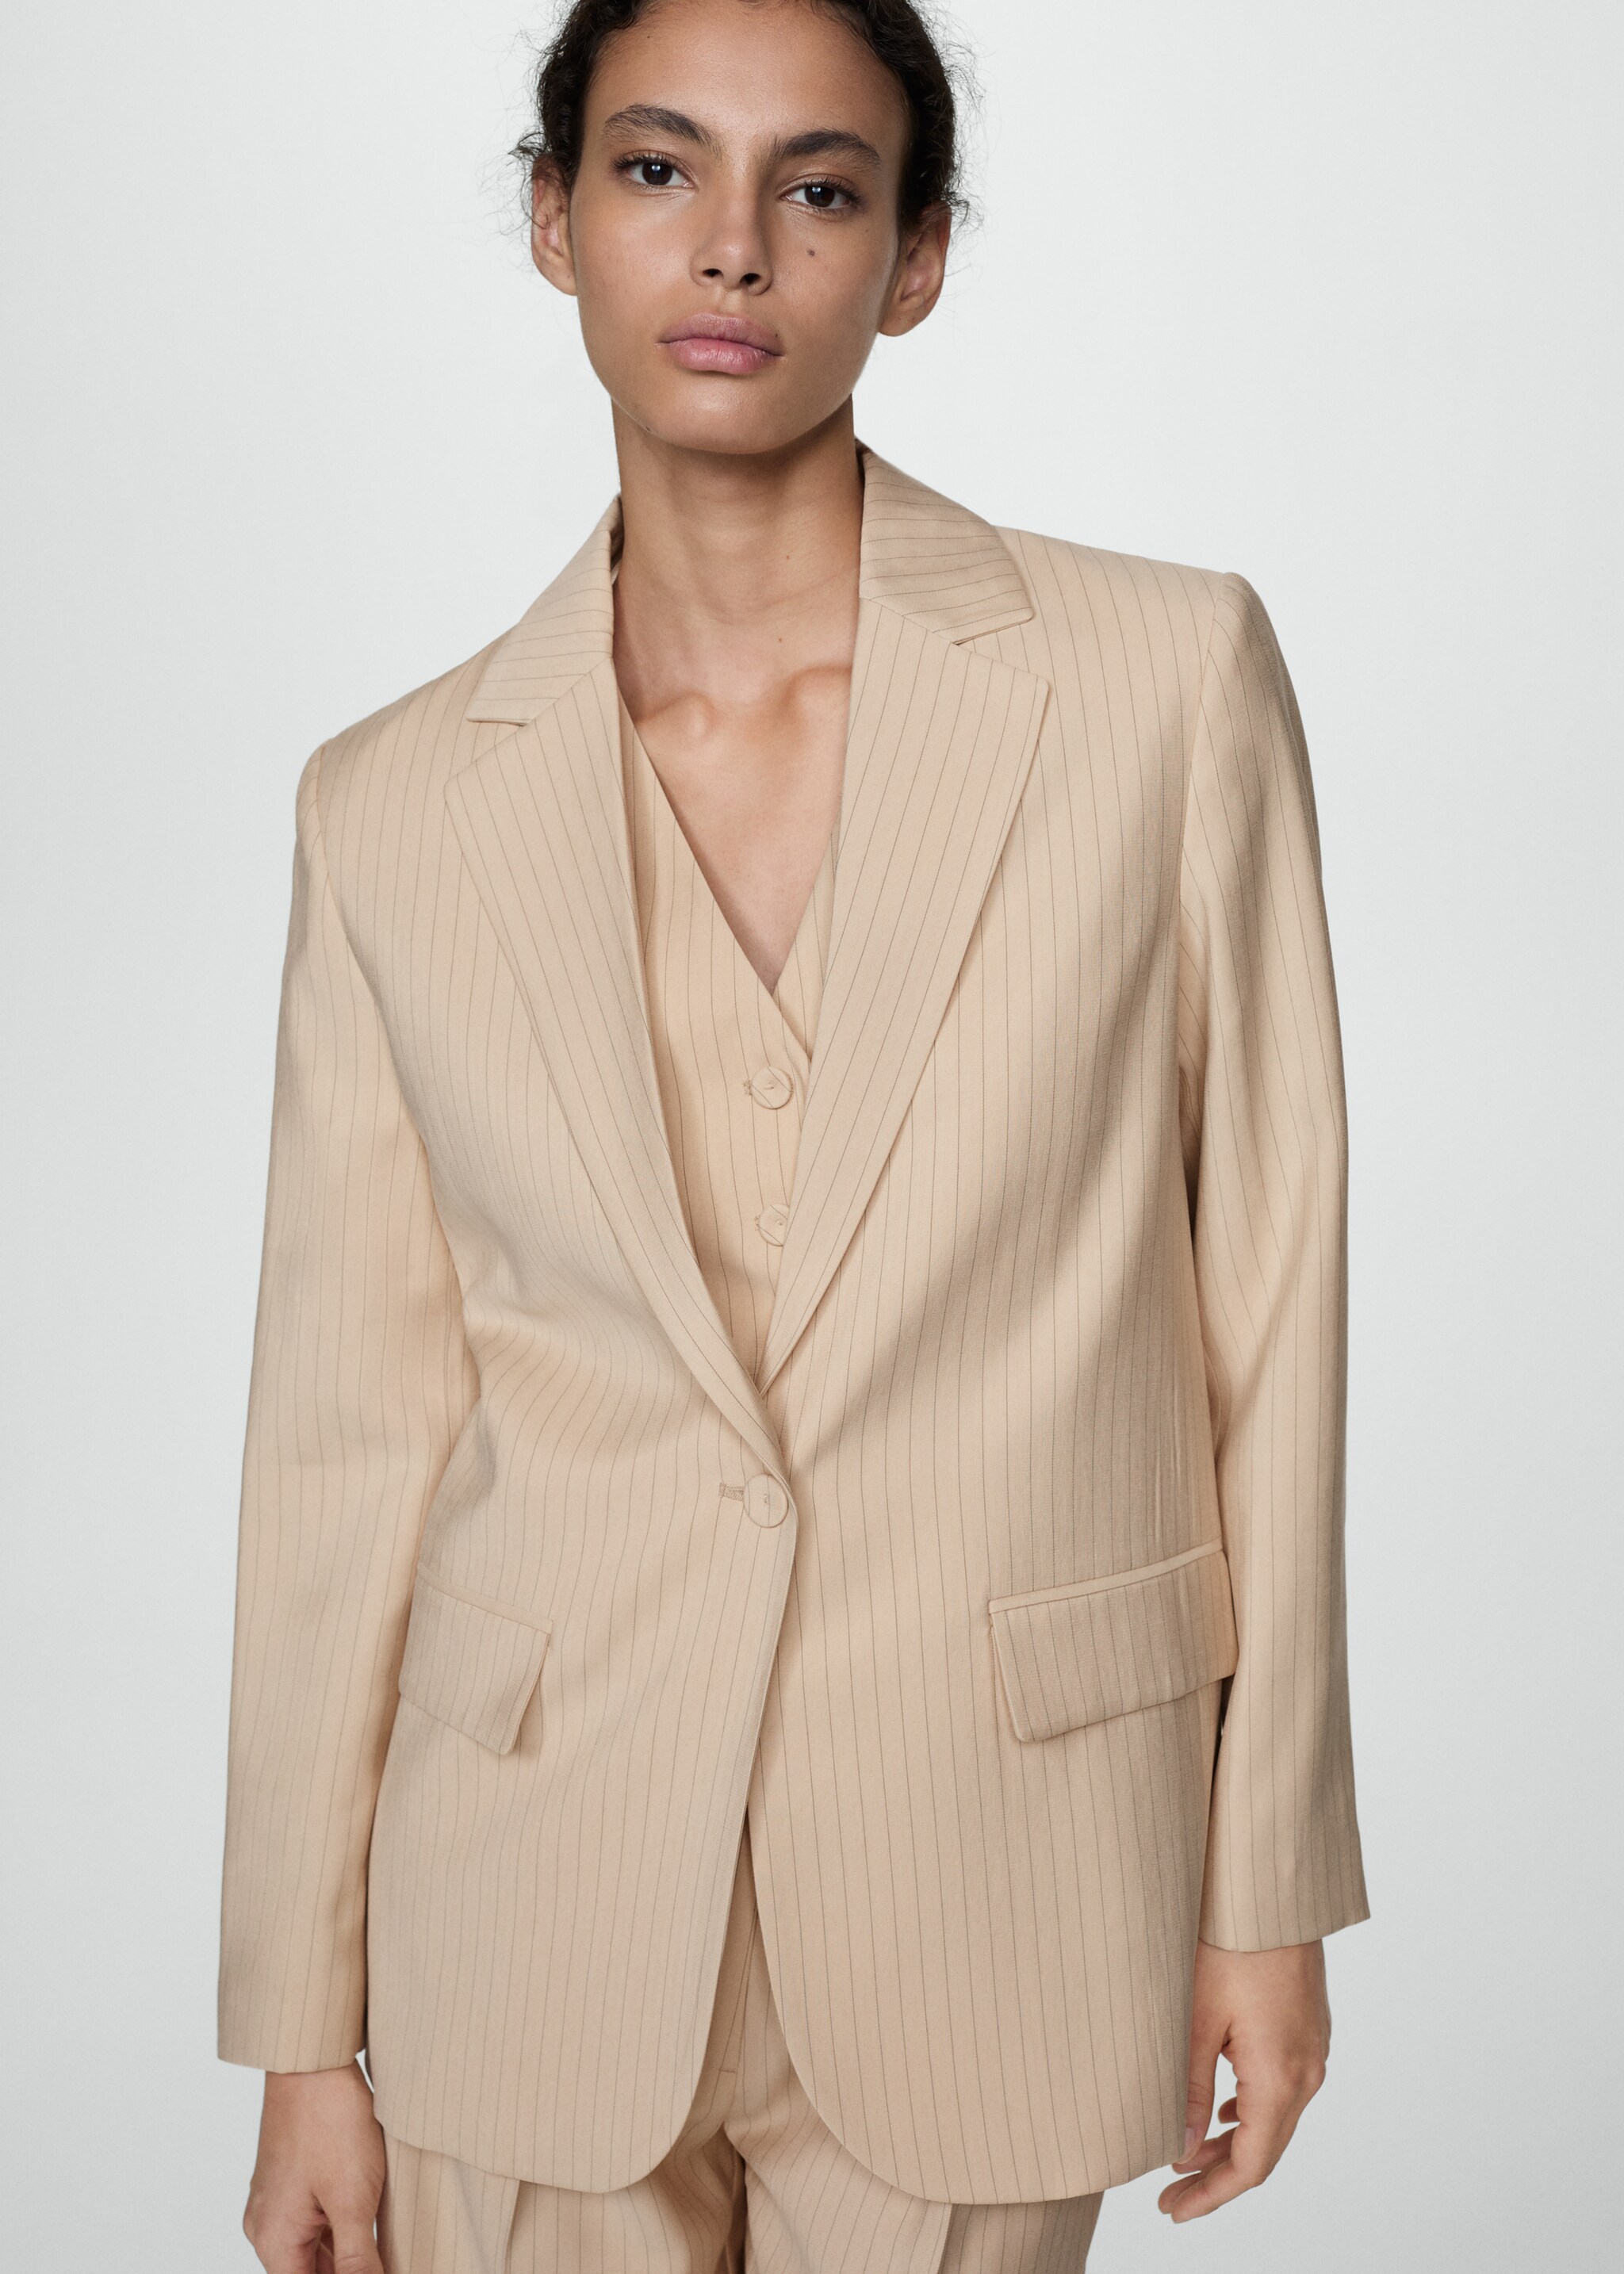 Pinstripe suit jacket - Medium plane